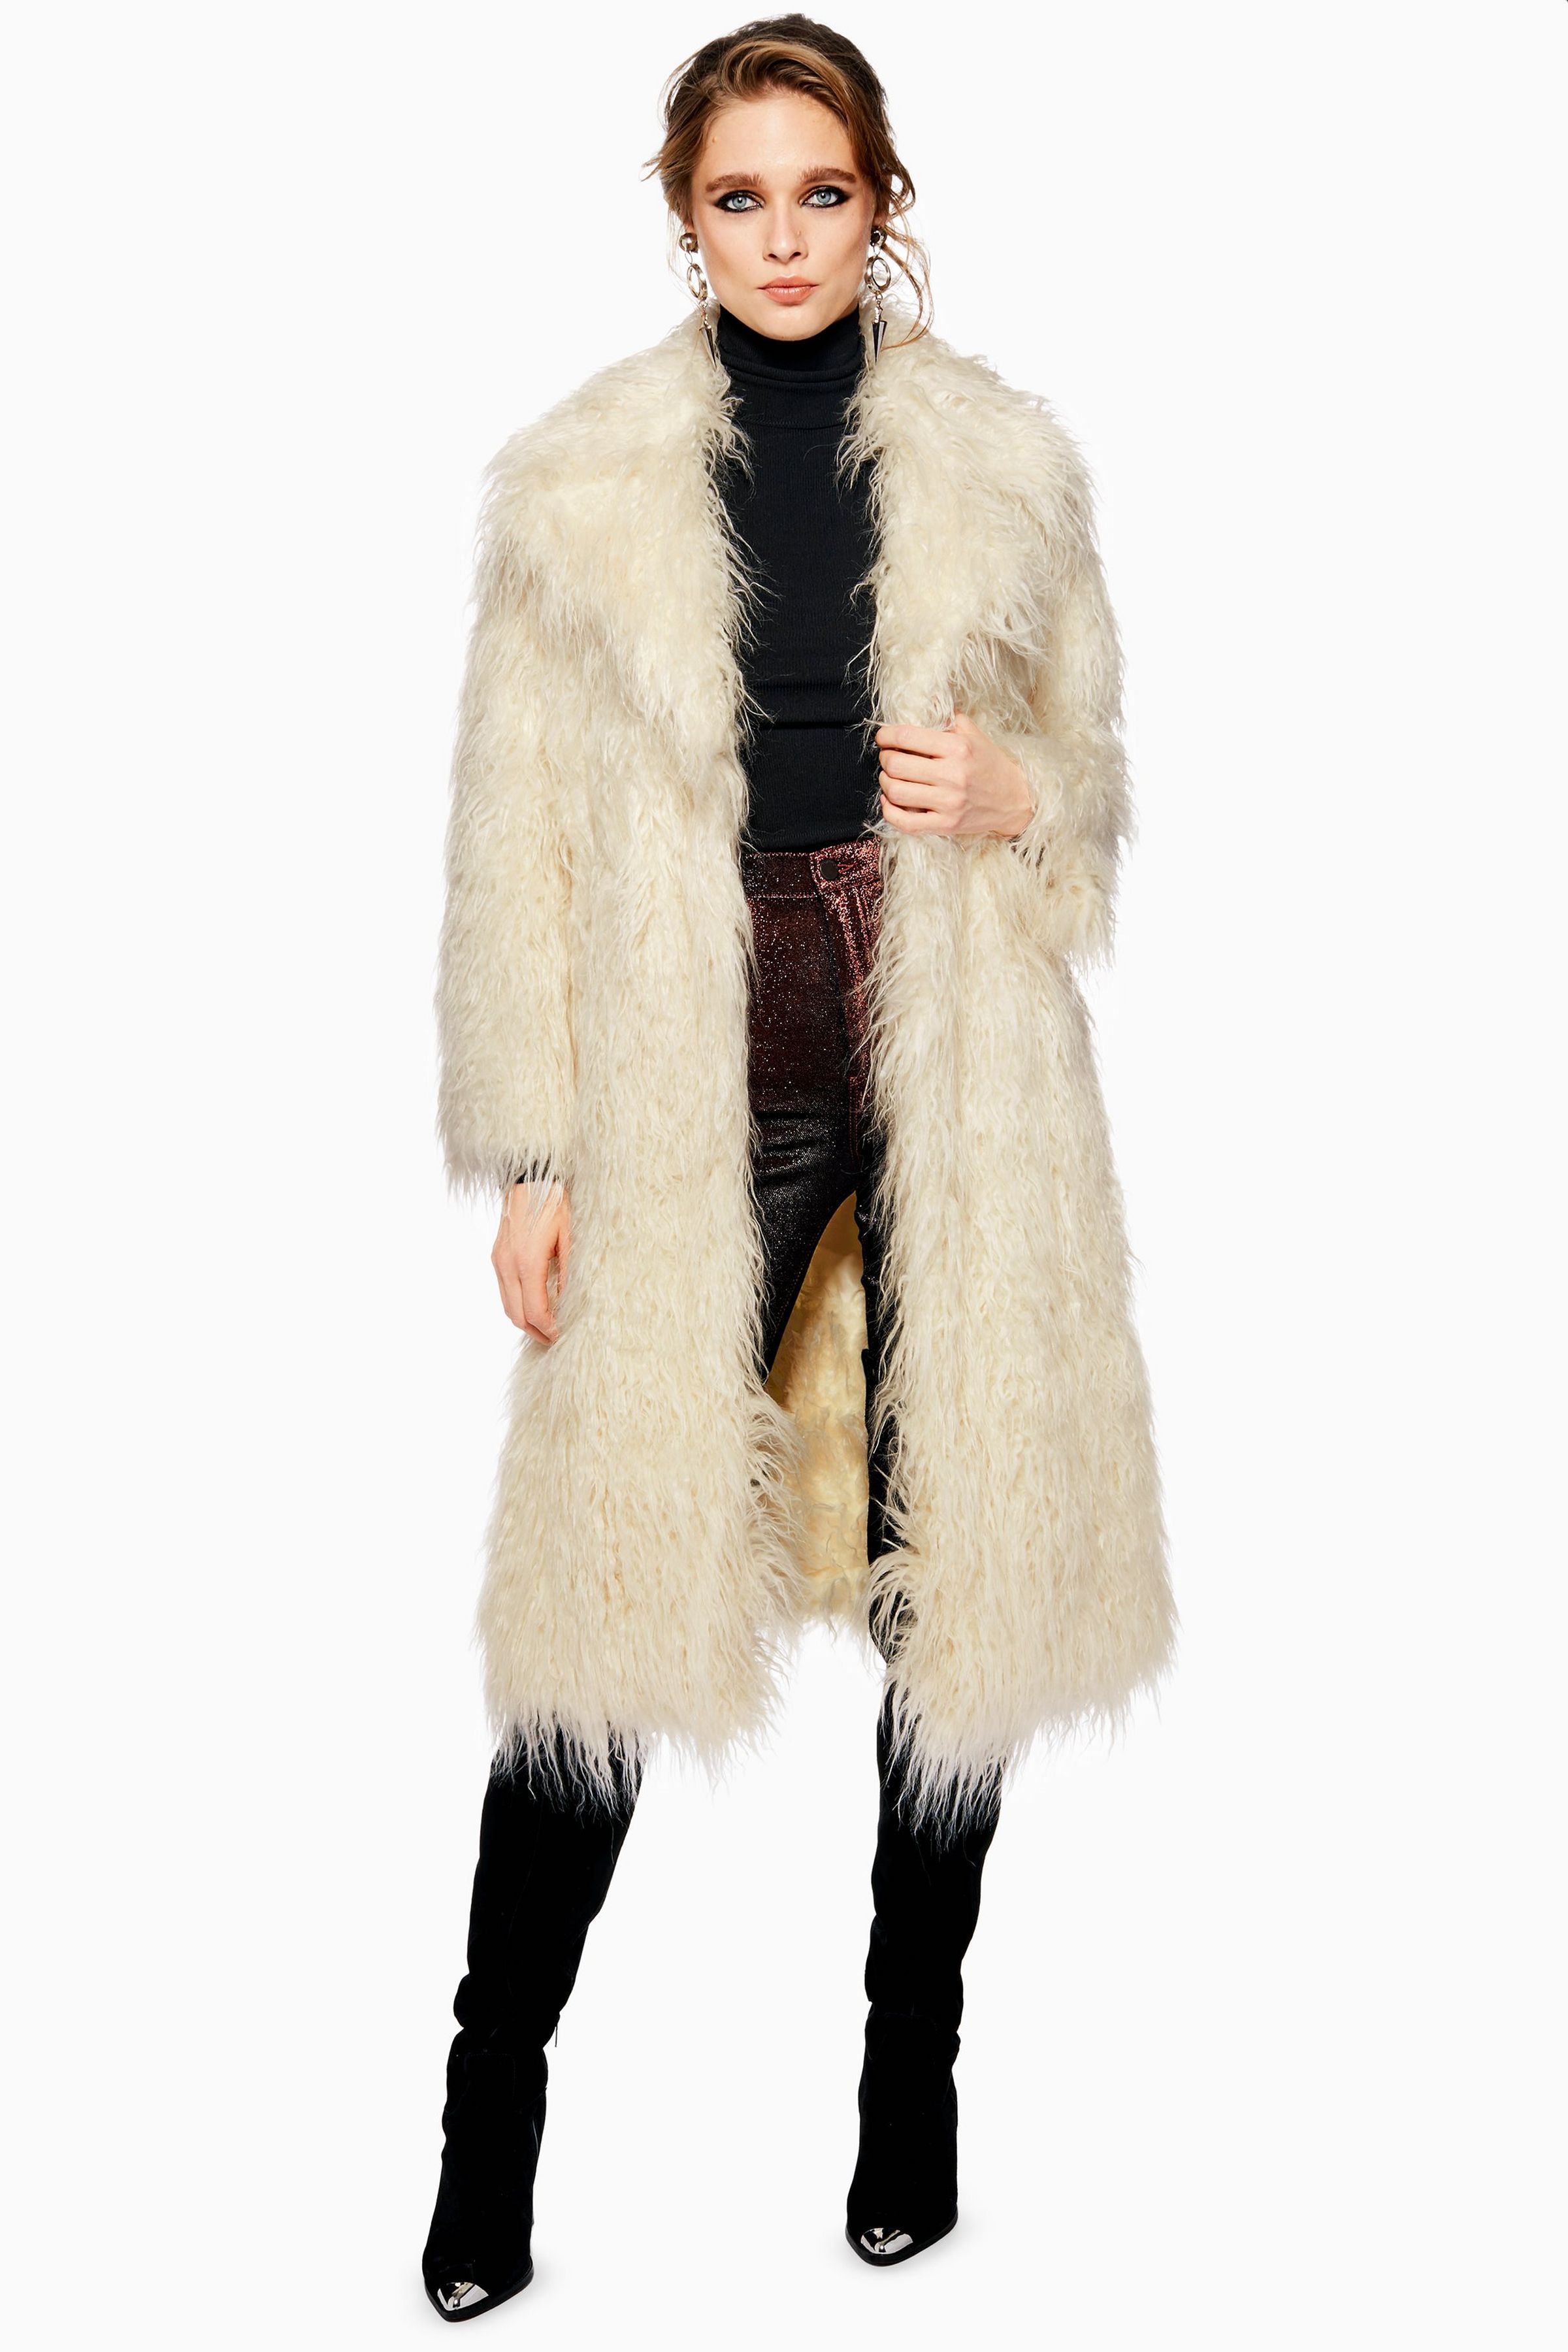 Topshop White Fur Coat.jpg